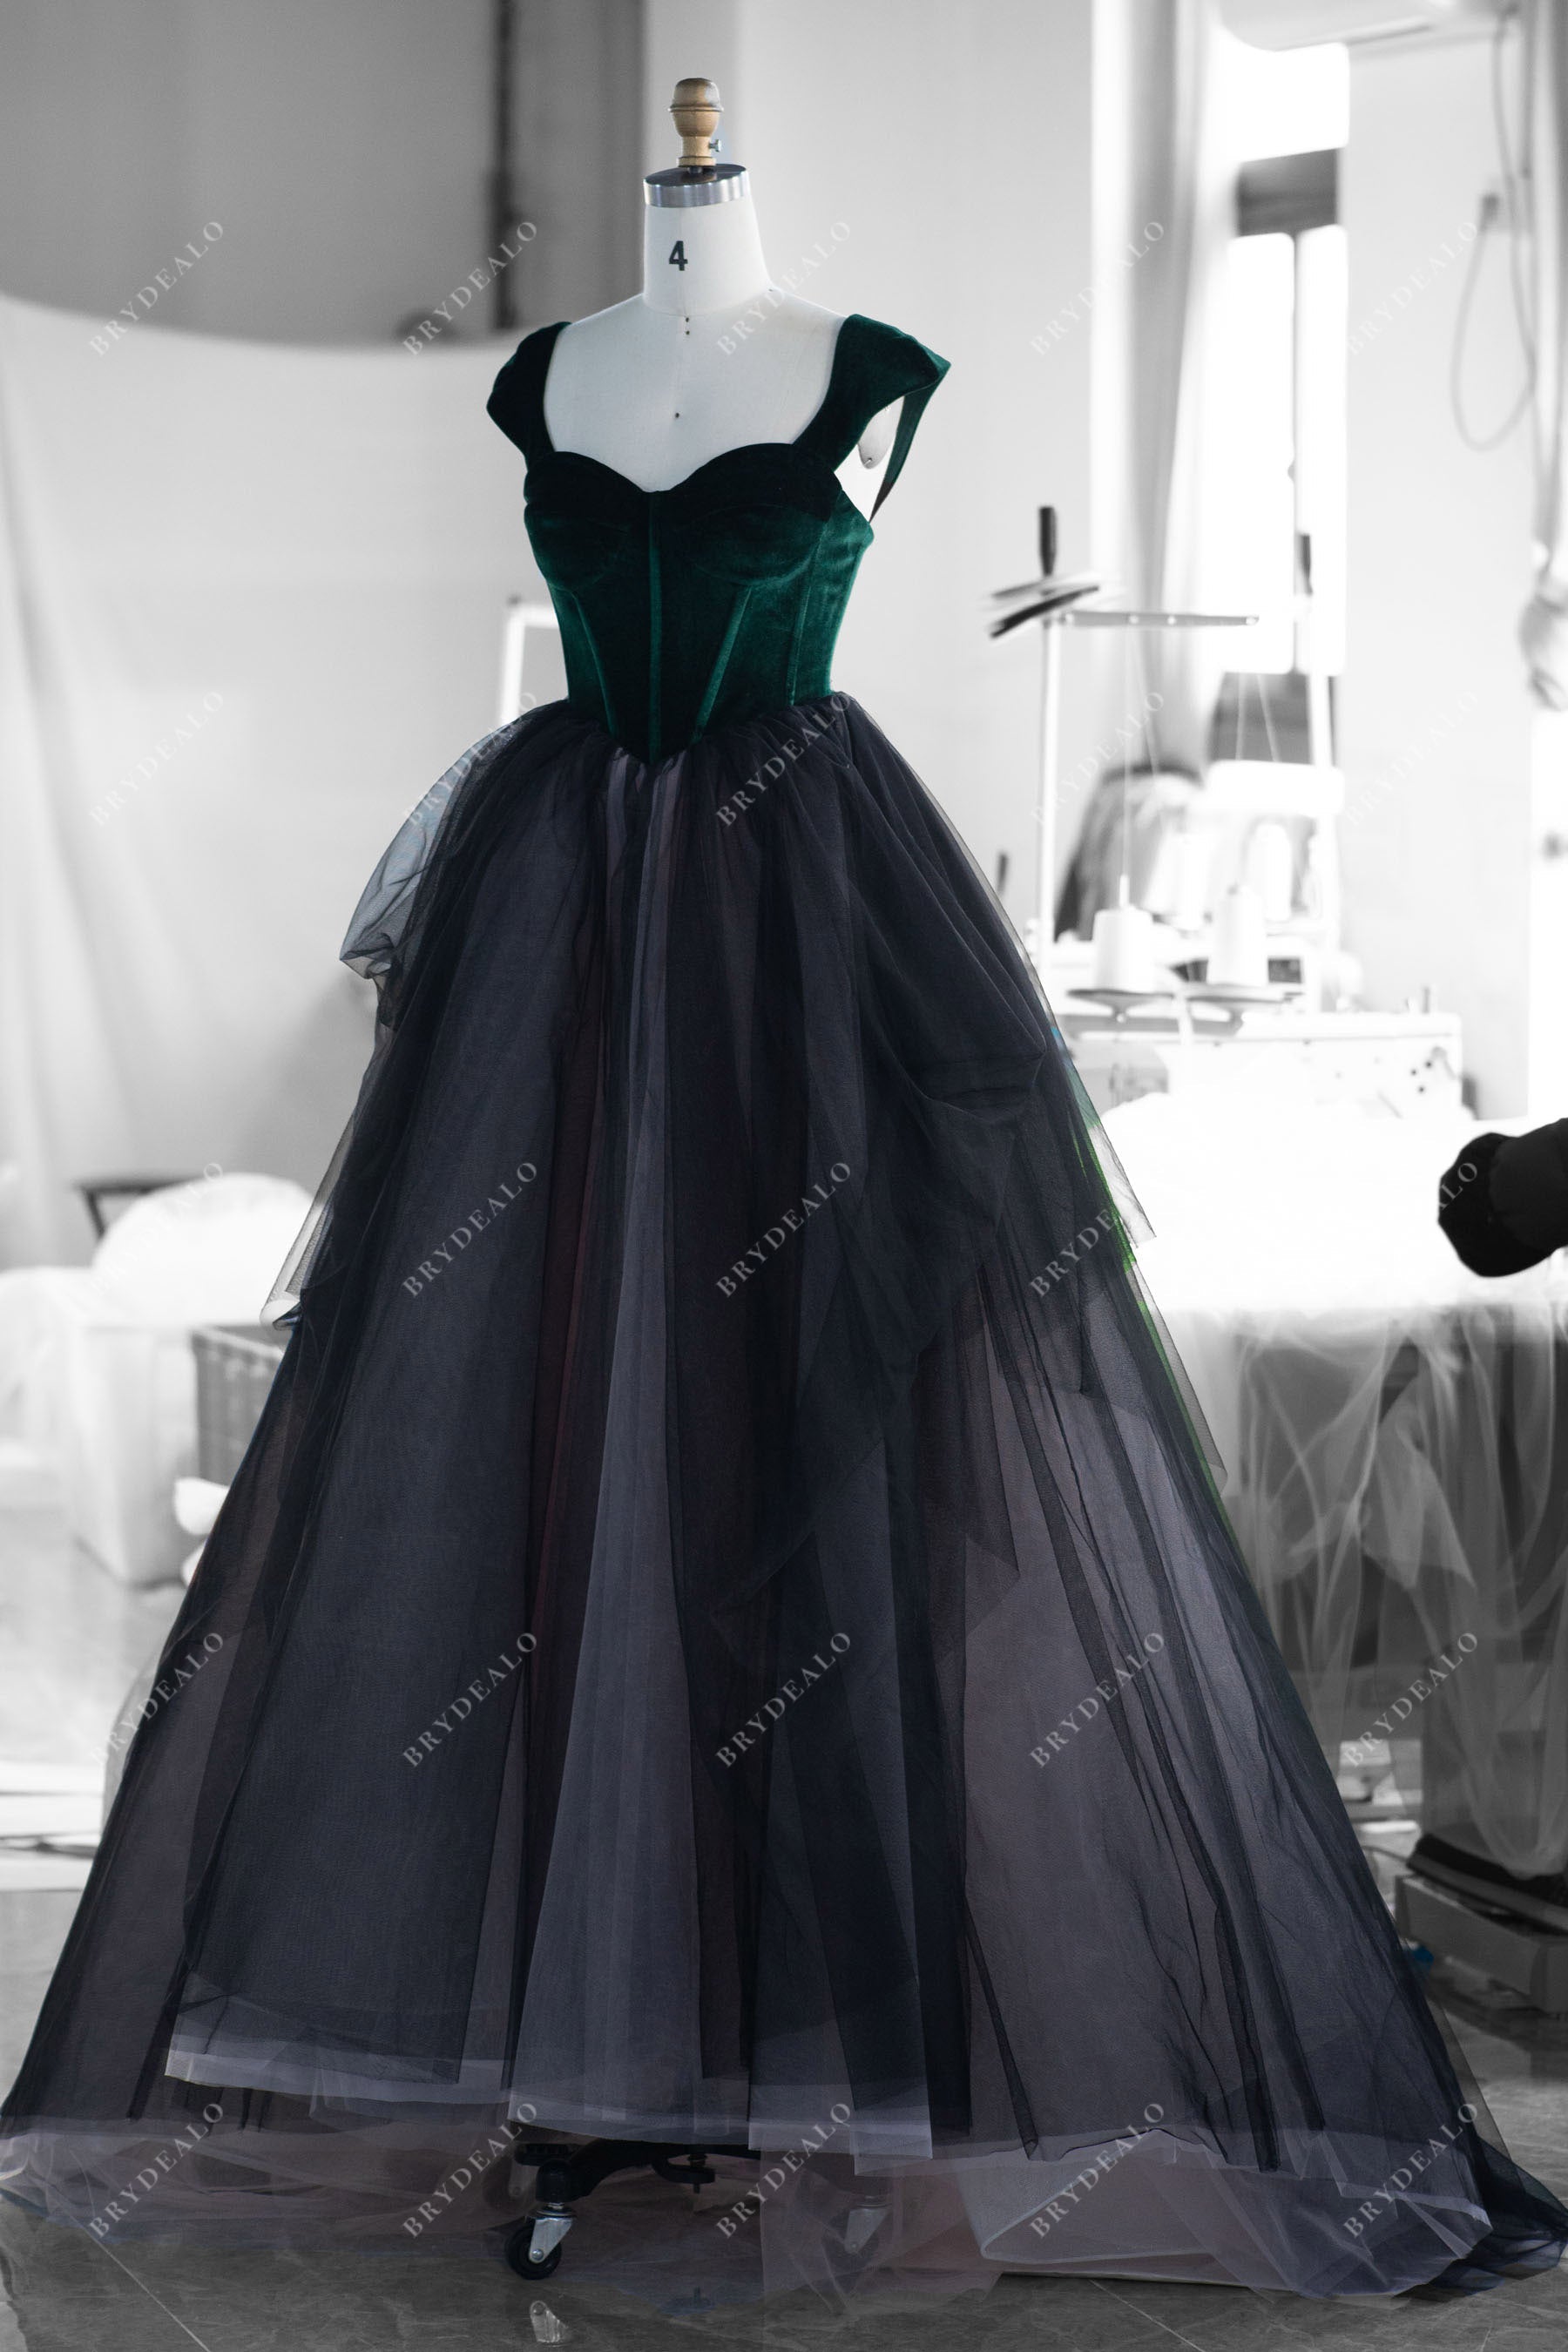 Timeless Ball Gown Designer Victoria Wedding Dress